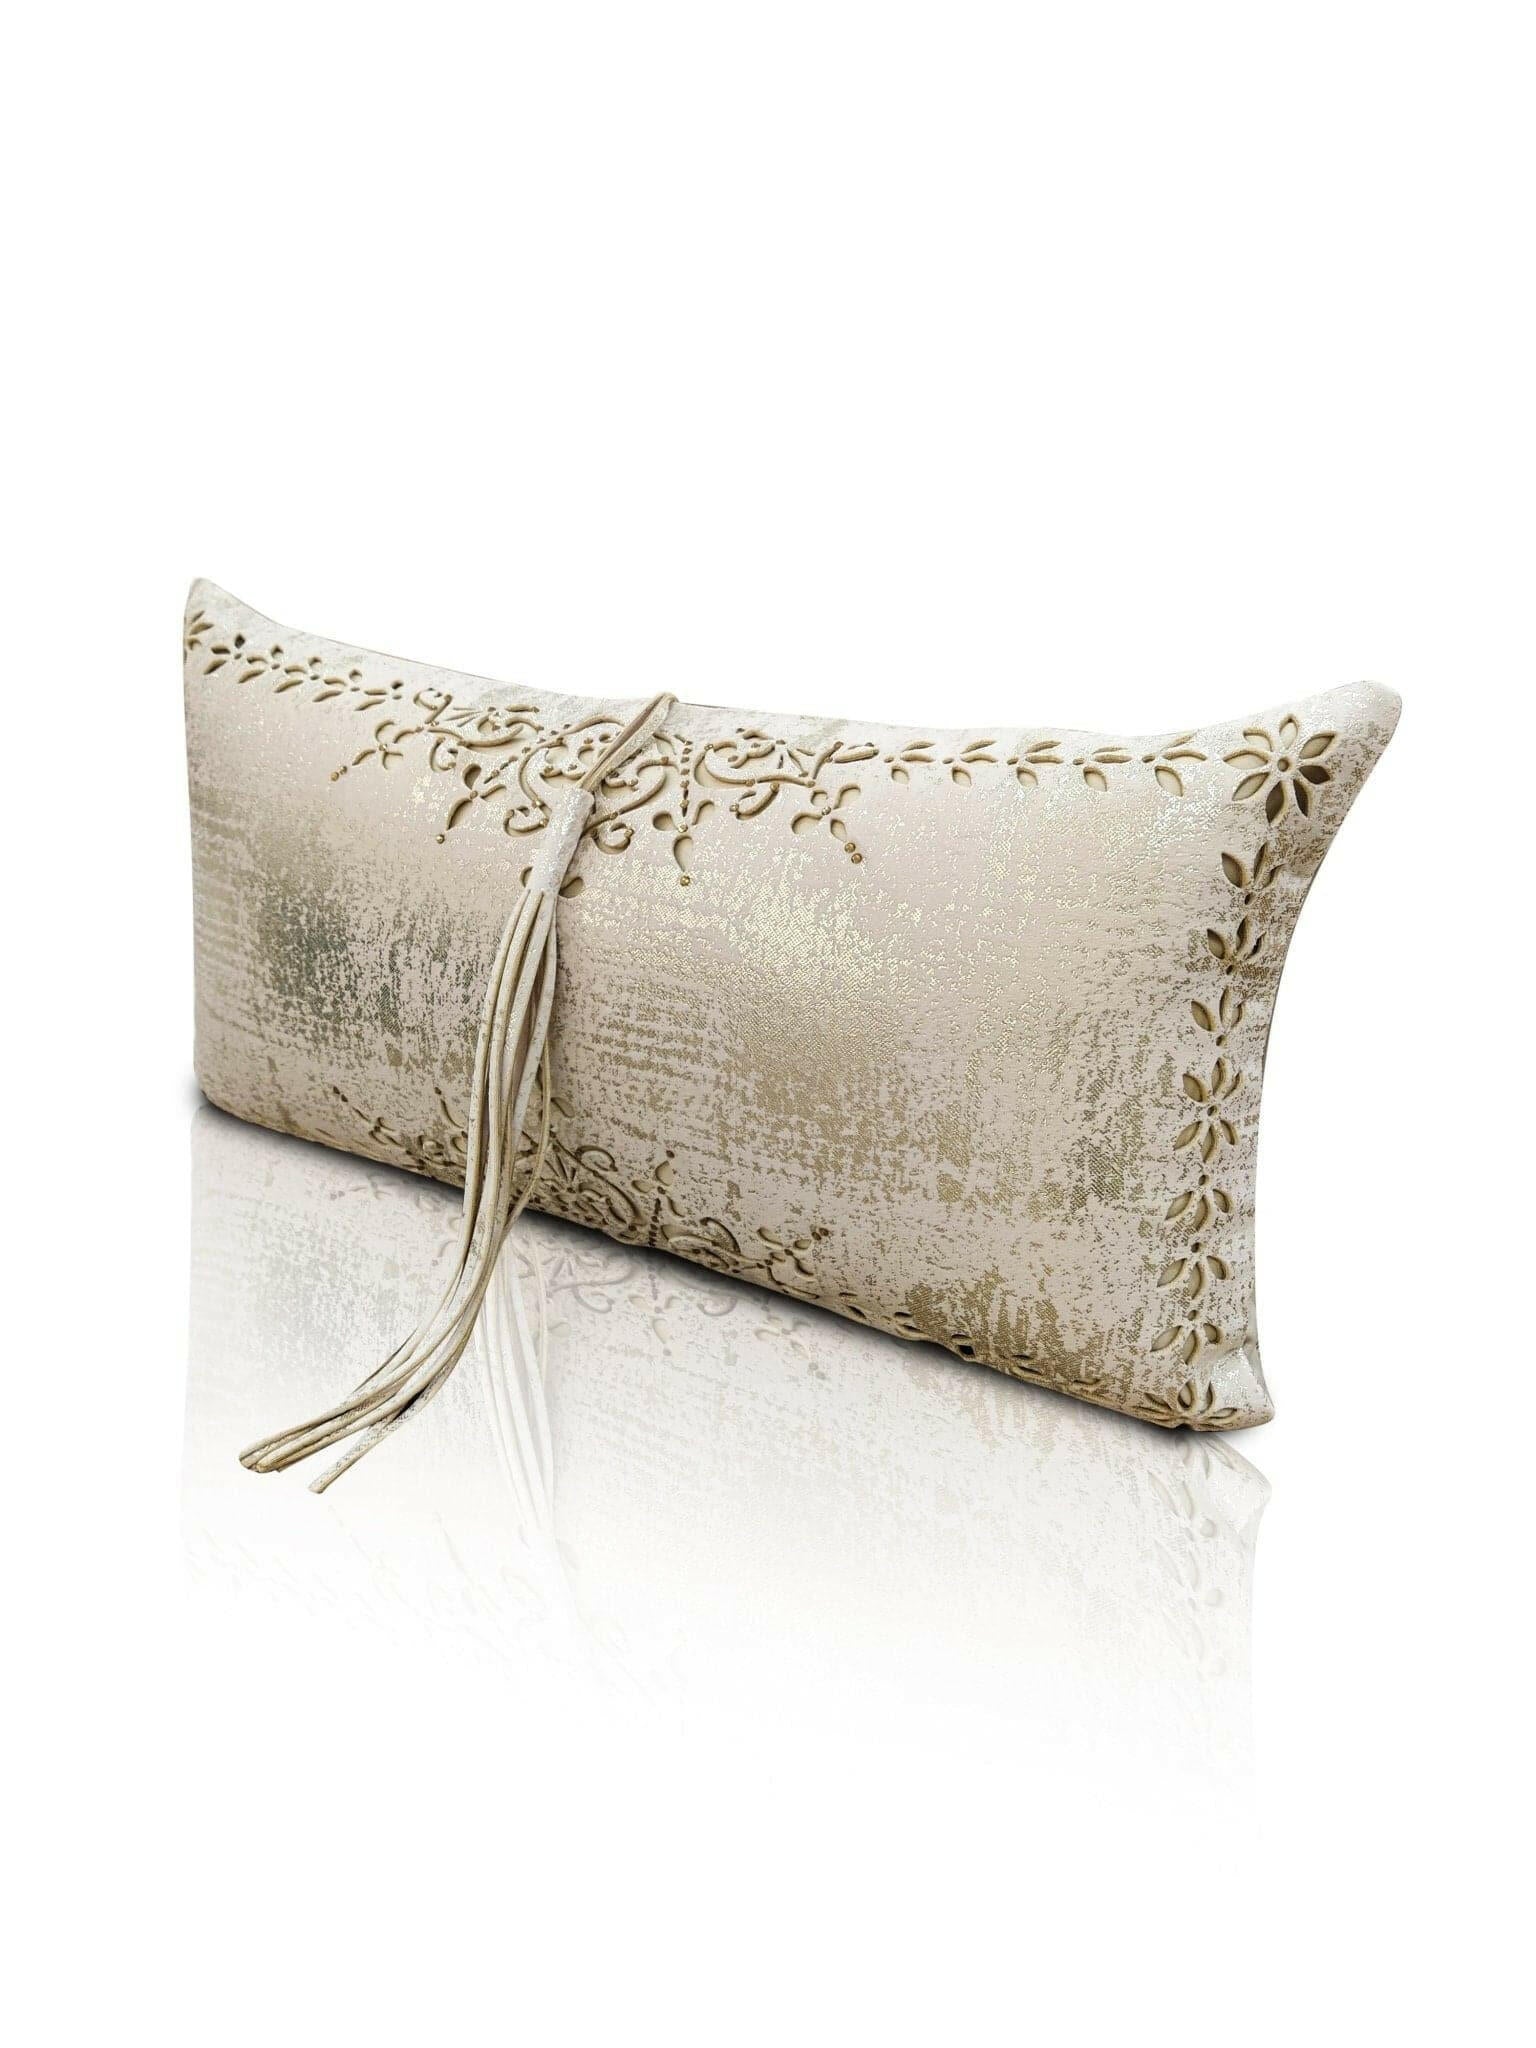 Damask Cushion Cover - Creative Home Designs Pillowcases, Turkish Throw Pillows & Shams, Gold Color Cut Out Sham With Diamonds,CC-CH-DMSK-E-1S1R,CC-CH-DMSK-E-2S,CC-CH-DMSK-E-2R,CC-CH-DMSK-E-2S1R